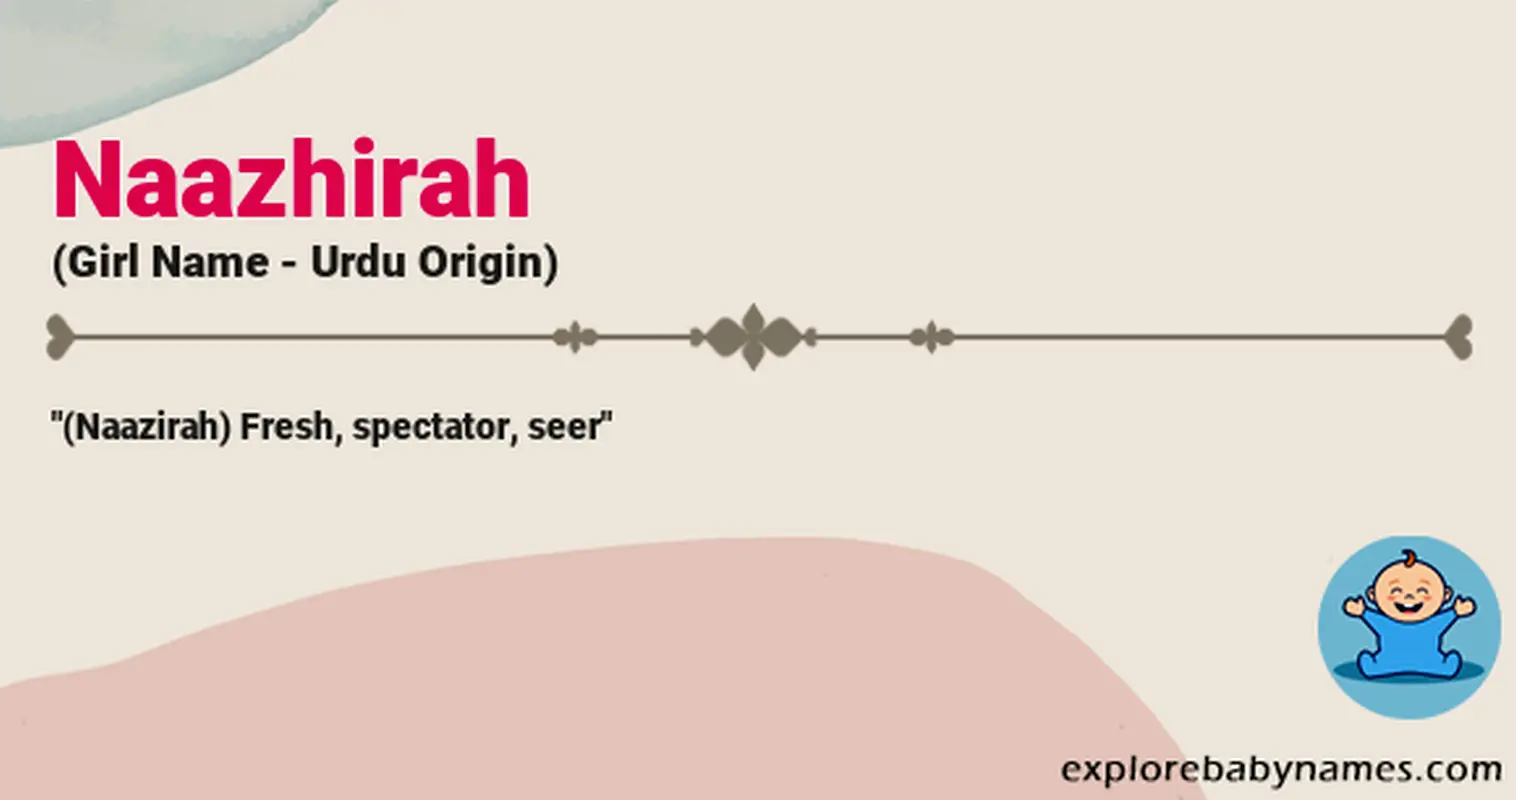 Meaning of Naazhirah